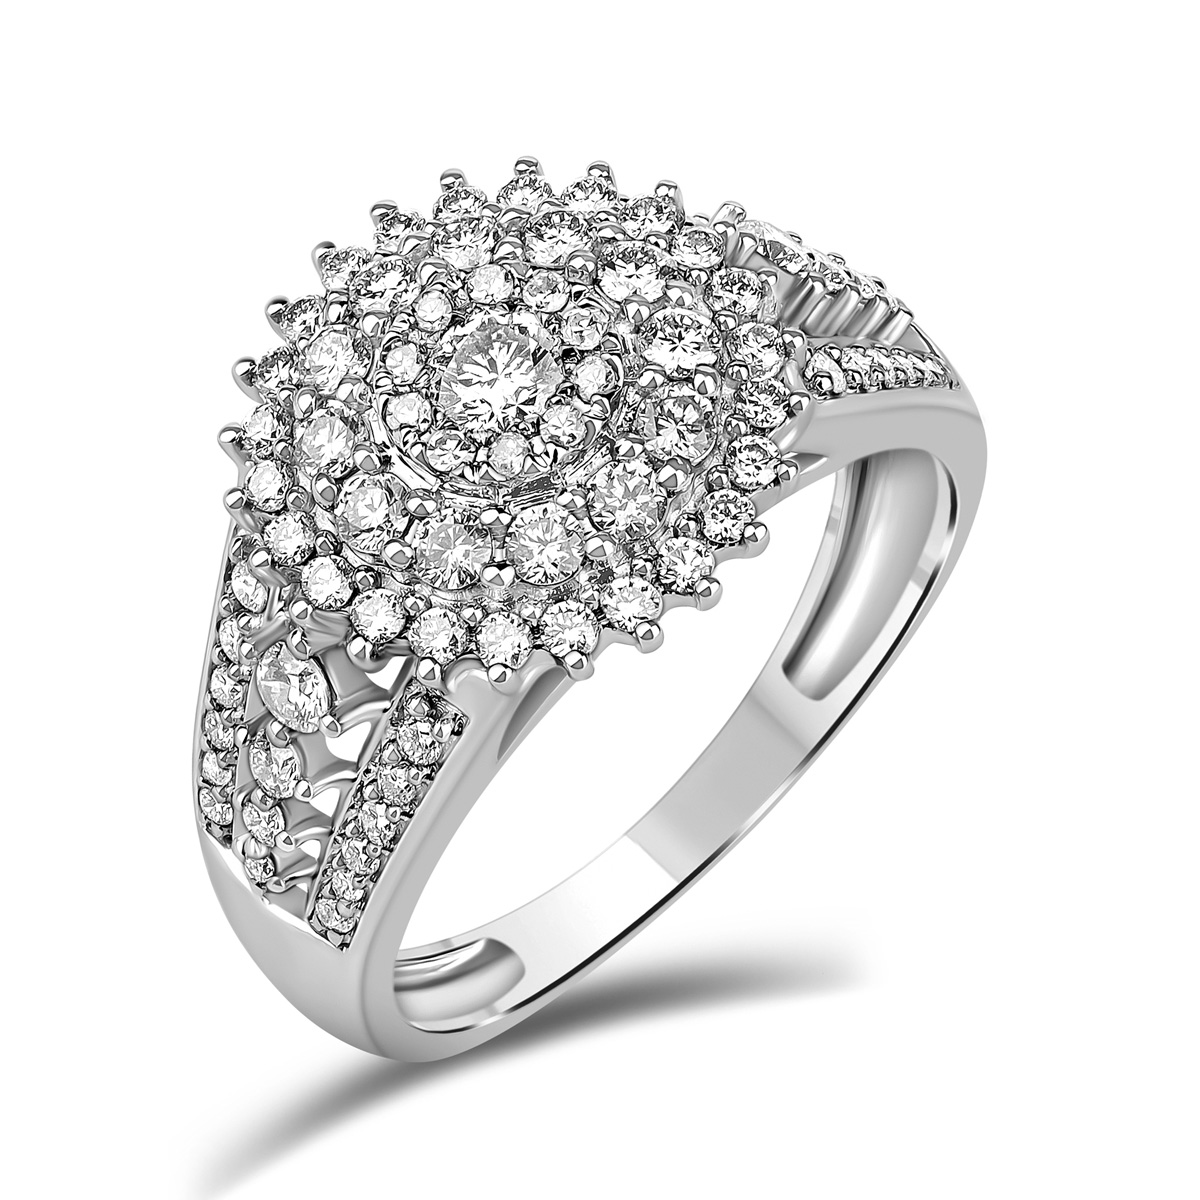 HE52456RWD4WN
14K white gold diamond ring